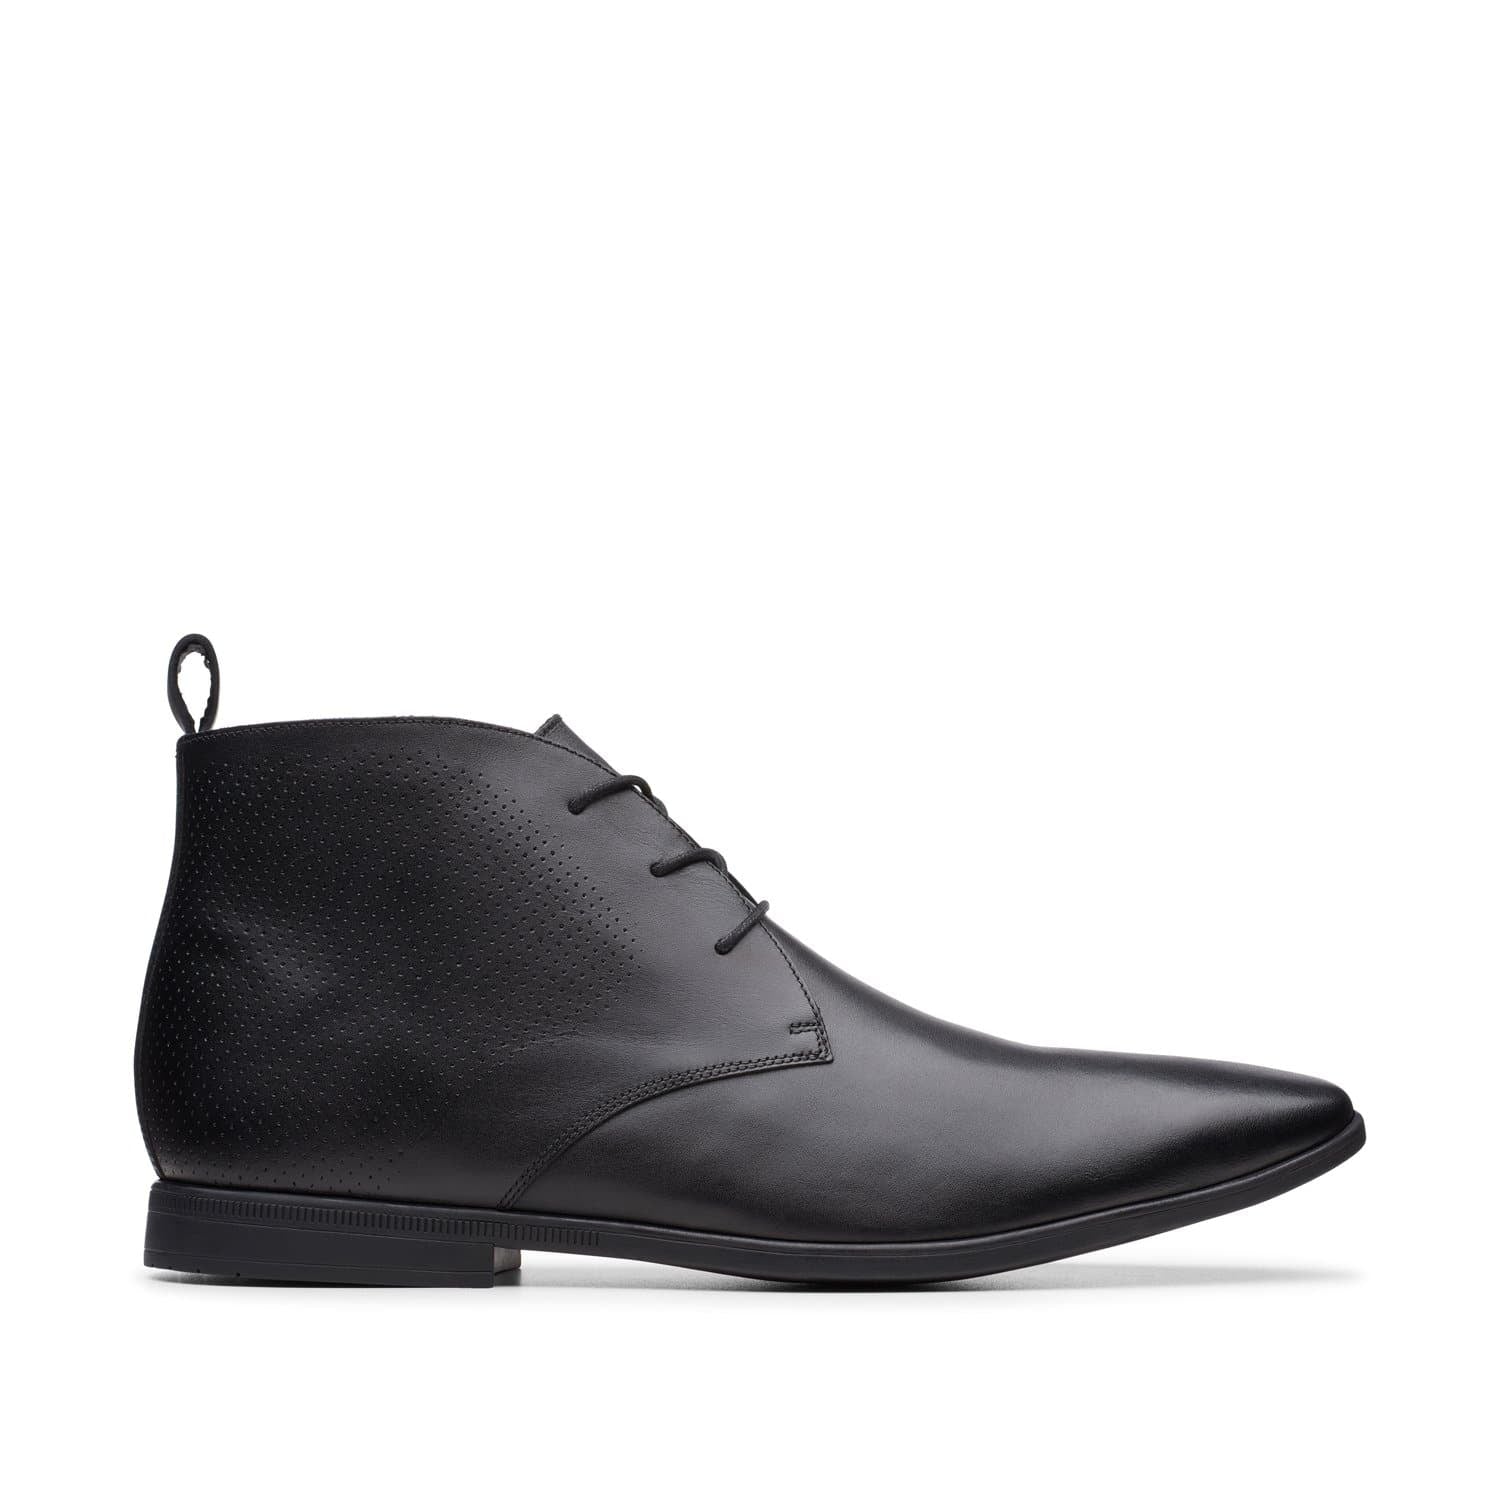 Clarks-Bampton-Up-Men's-Boots-Black-Leather-26144985